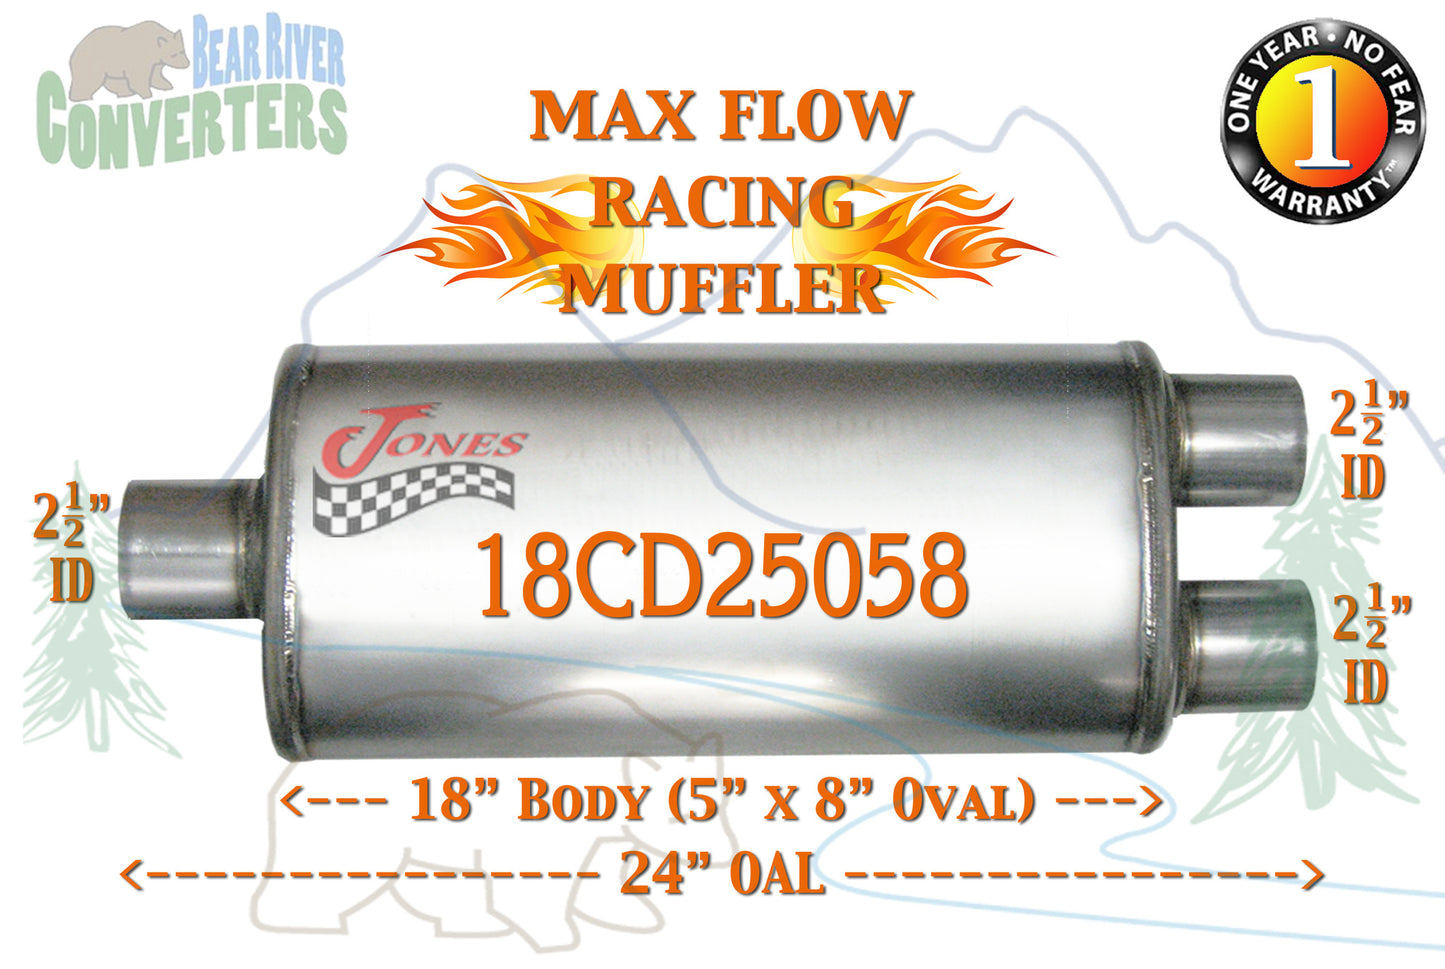 18CD25058 Jones MF2268 Max Flow Racing Muffler 18” Oval Body 2 1/2” 2.5” Pipe Center/Dual 24” OAL - Bear River Converters